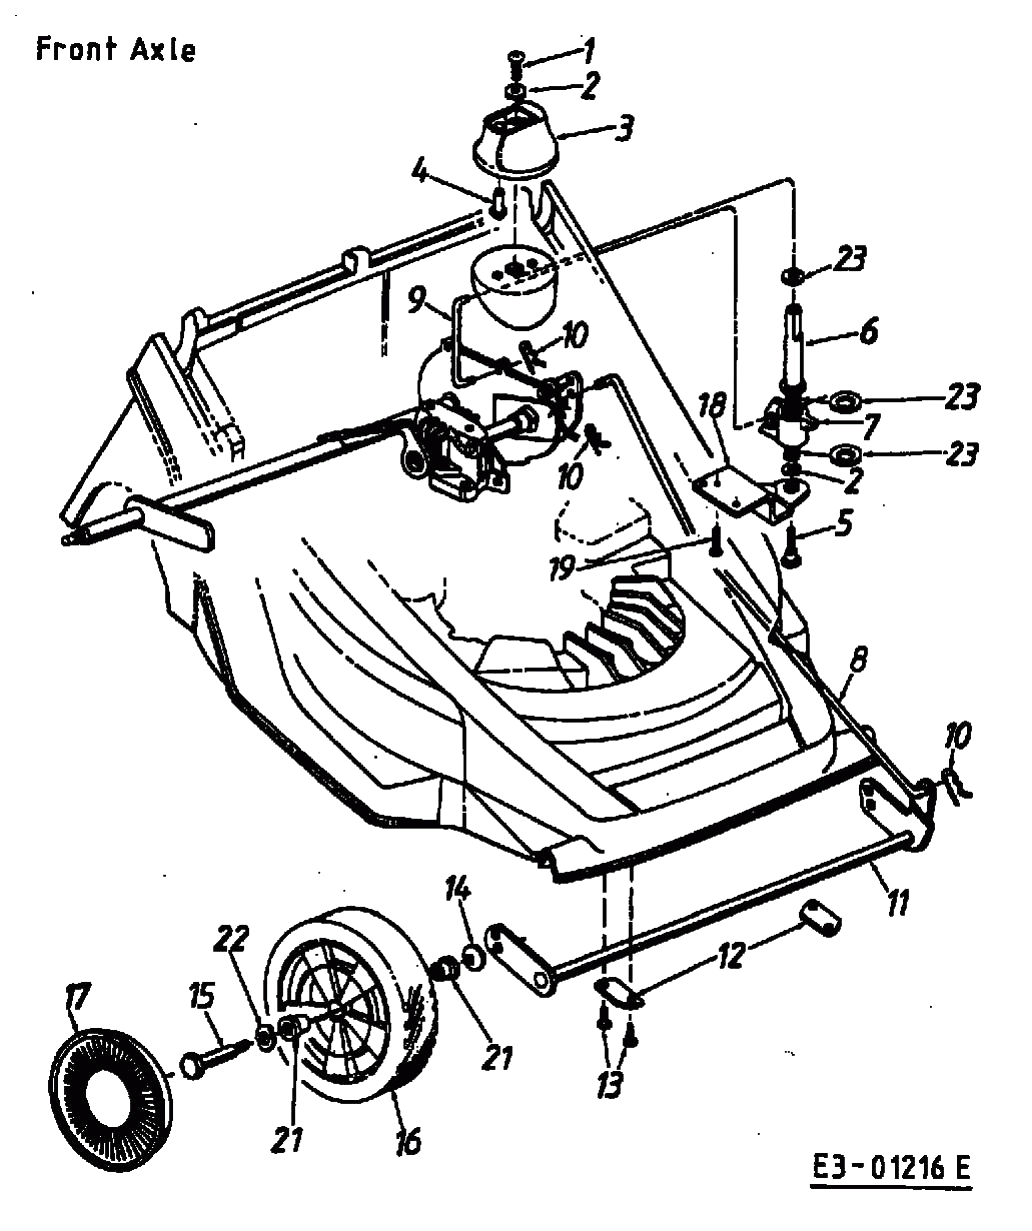 MTD Артикул 12B-658C678 (год выпуска 2001). Передние колеса, регулятор высоты реза